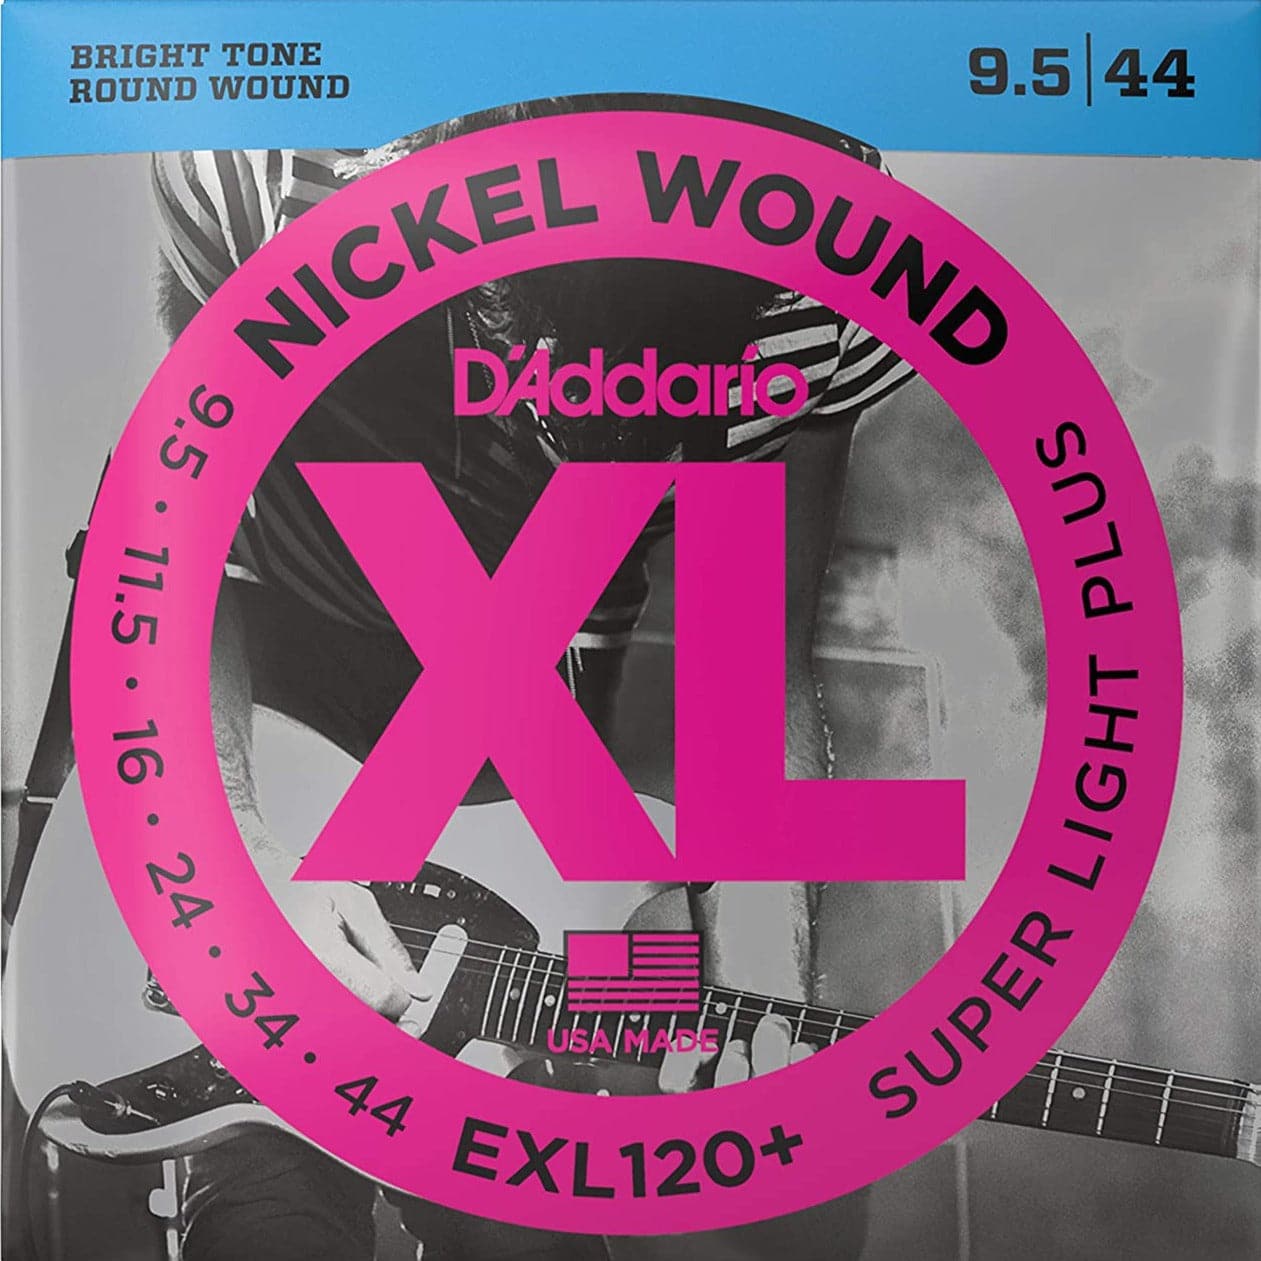 D'Addario EXL120+ XL Electric Guitar Strings - Super Light Plus - 9.5-44